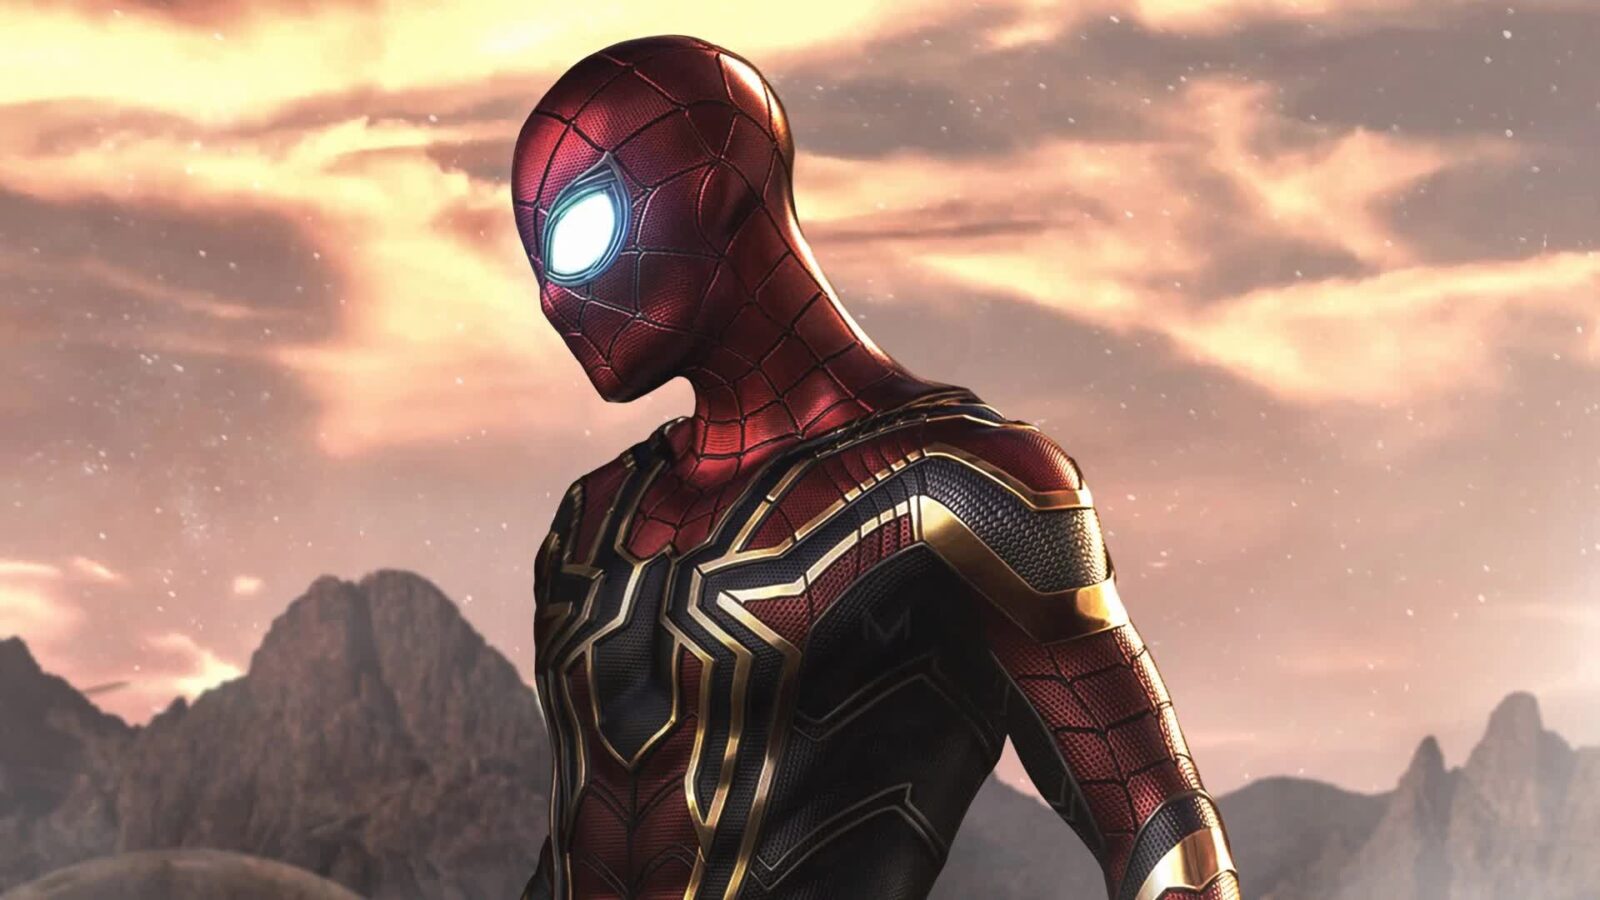 Live Desktop Wallpapers | Superhero Spider Man Marvel Comics - Free Live Wallpaper